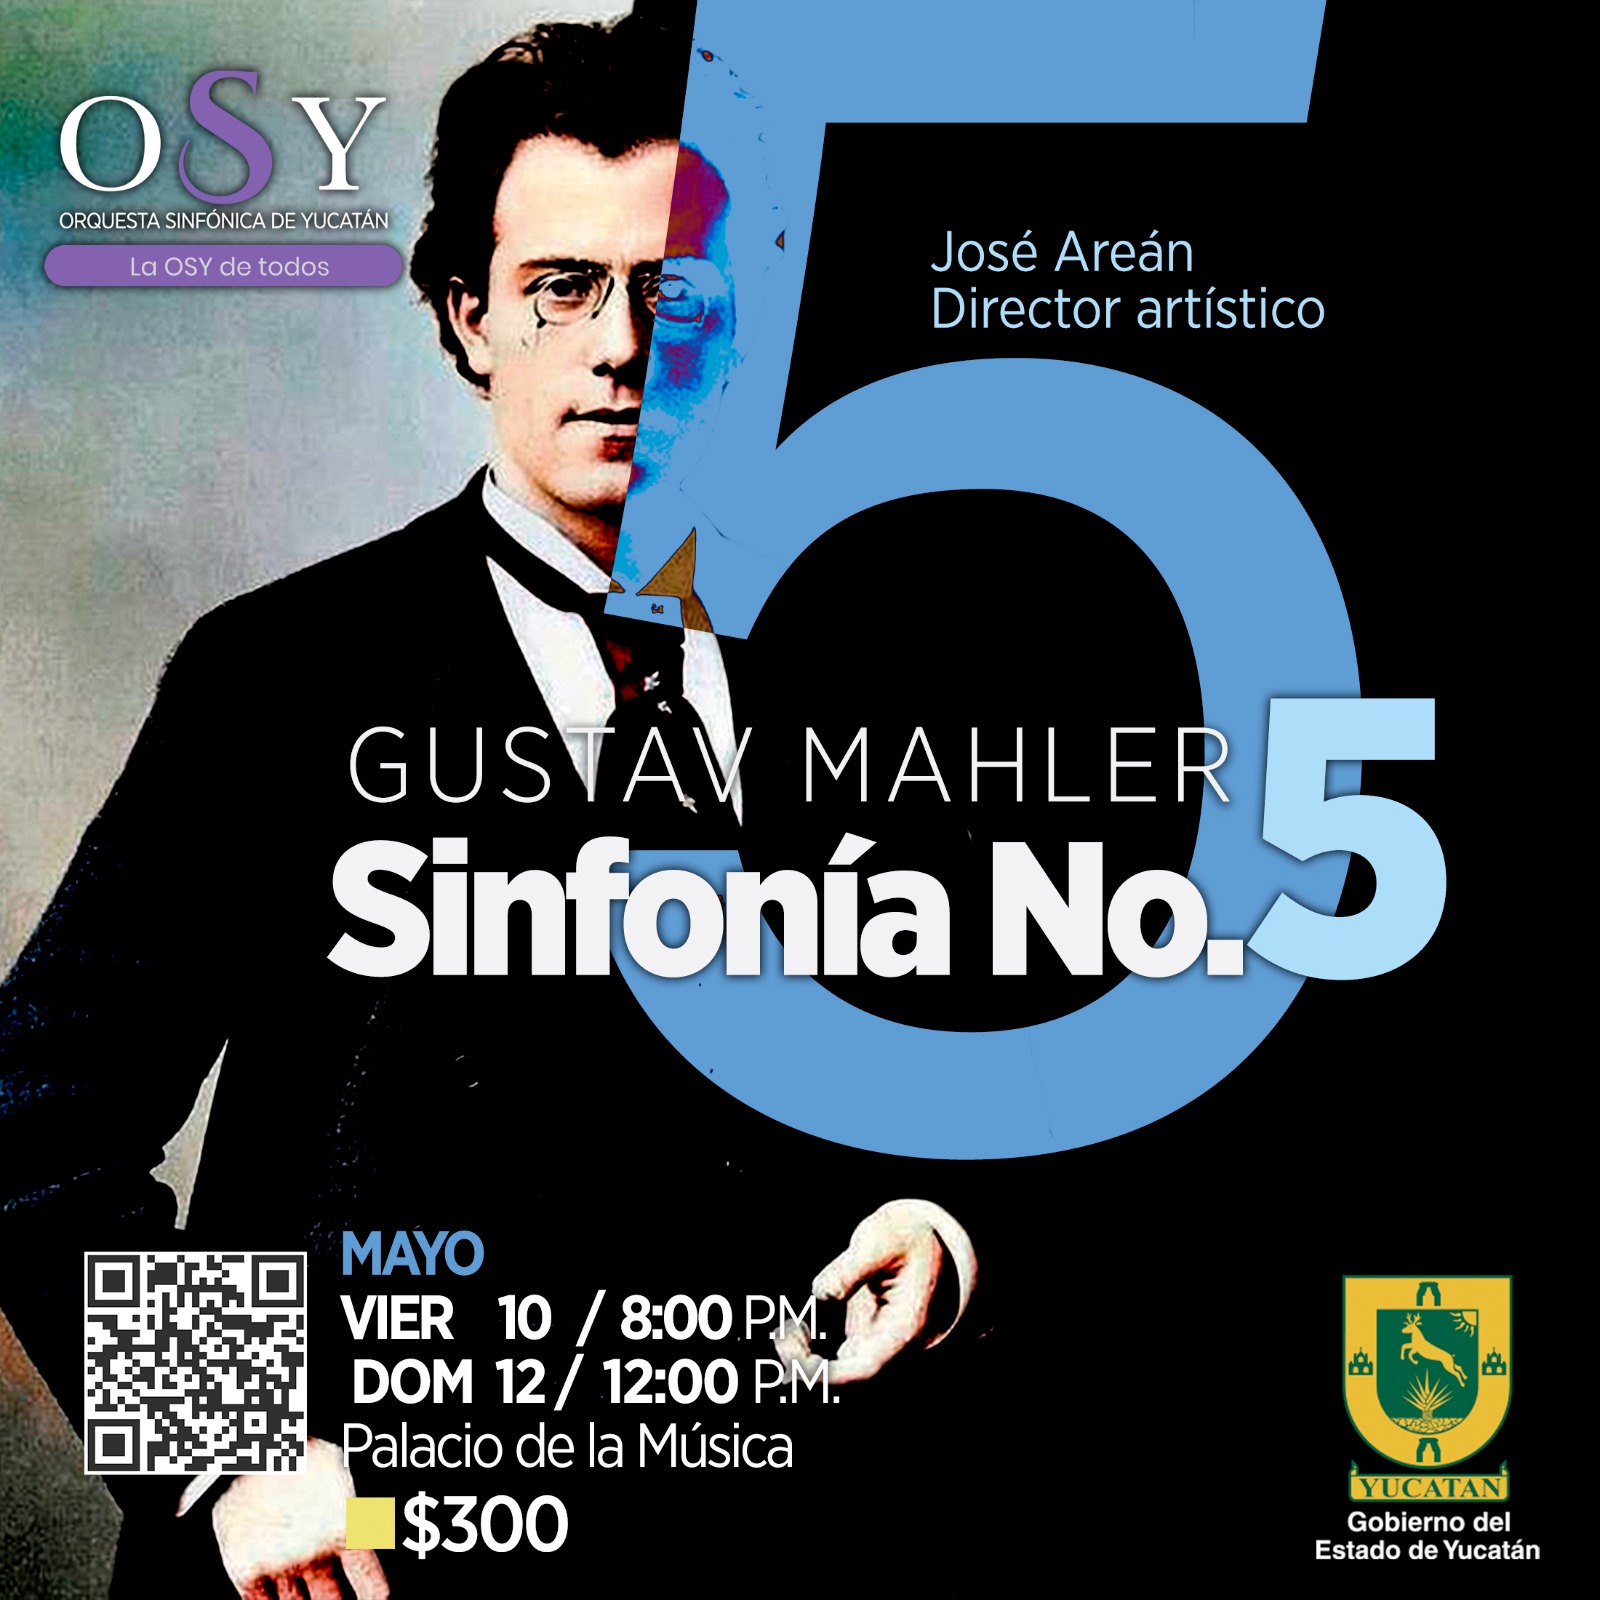 La OSY presentará colosal obra: la Sinfonía No. 5 de Gustav Mahler.